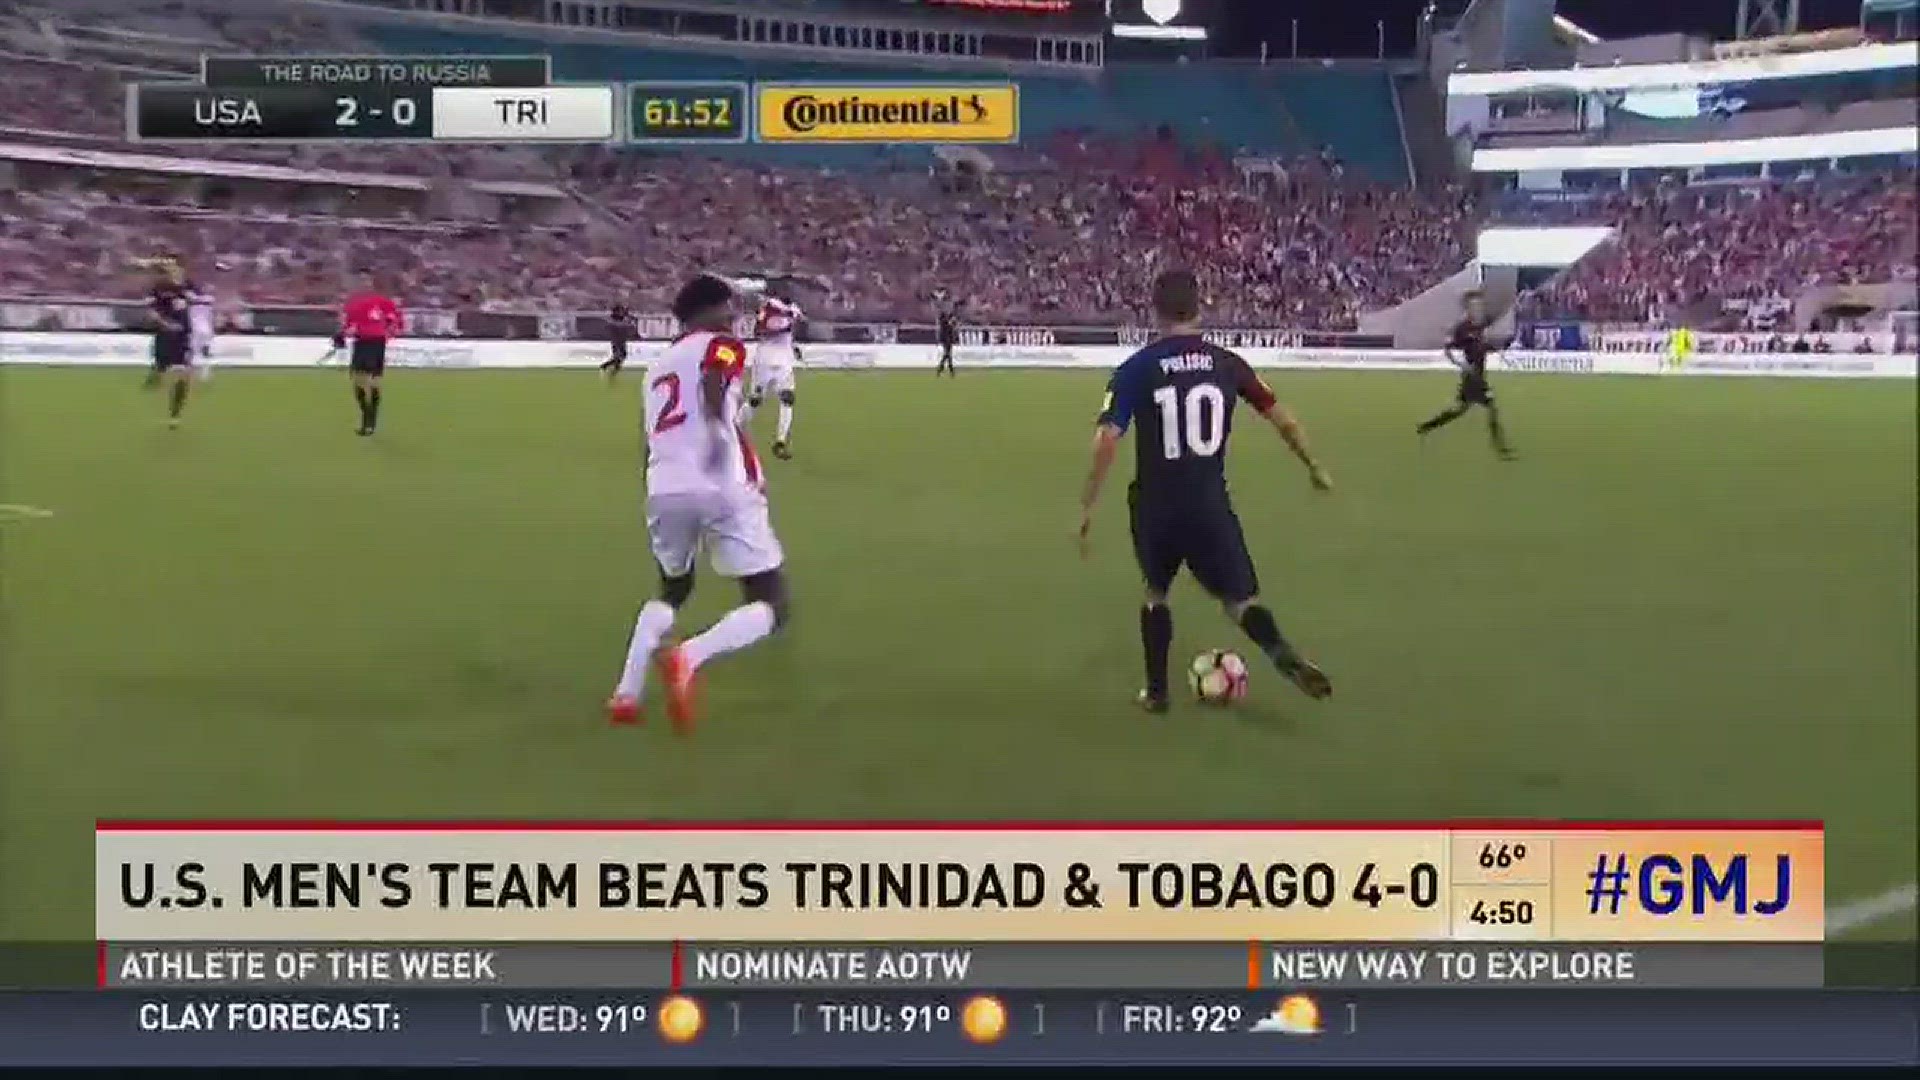 USMNT advances after defeating Trinidad & Tobago 4-0 in Jacksonville, Fla. on Tuesday, Sept. 6.